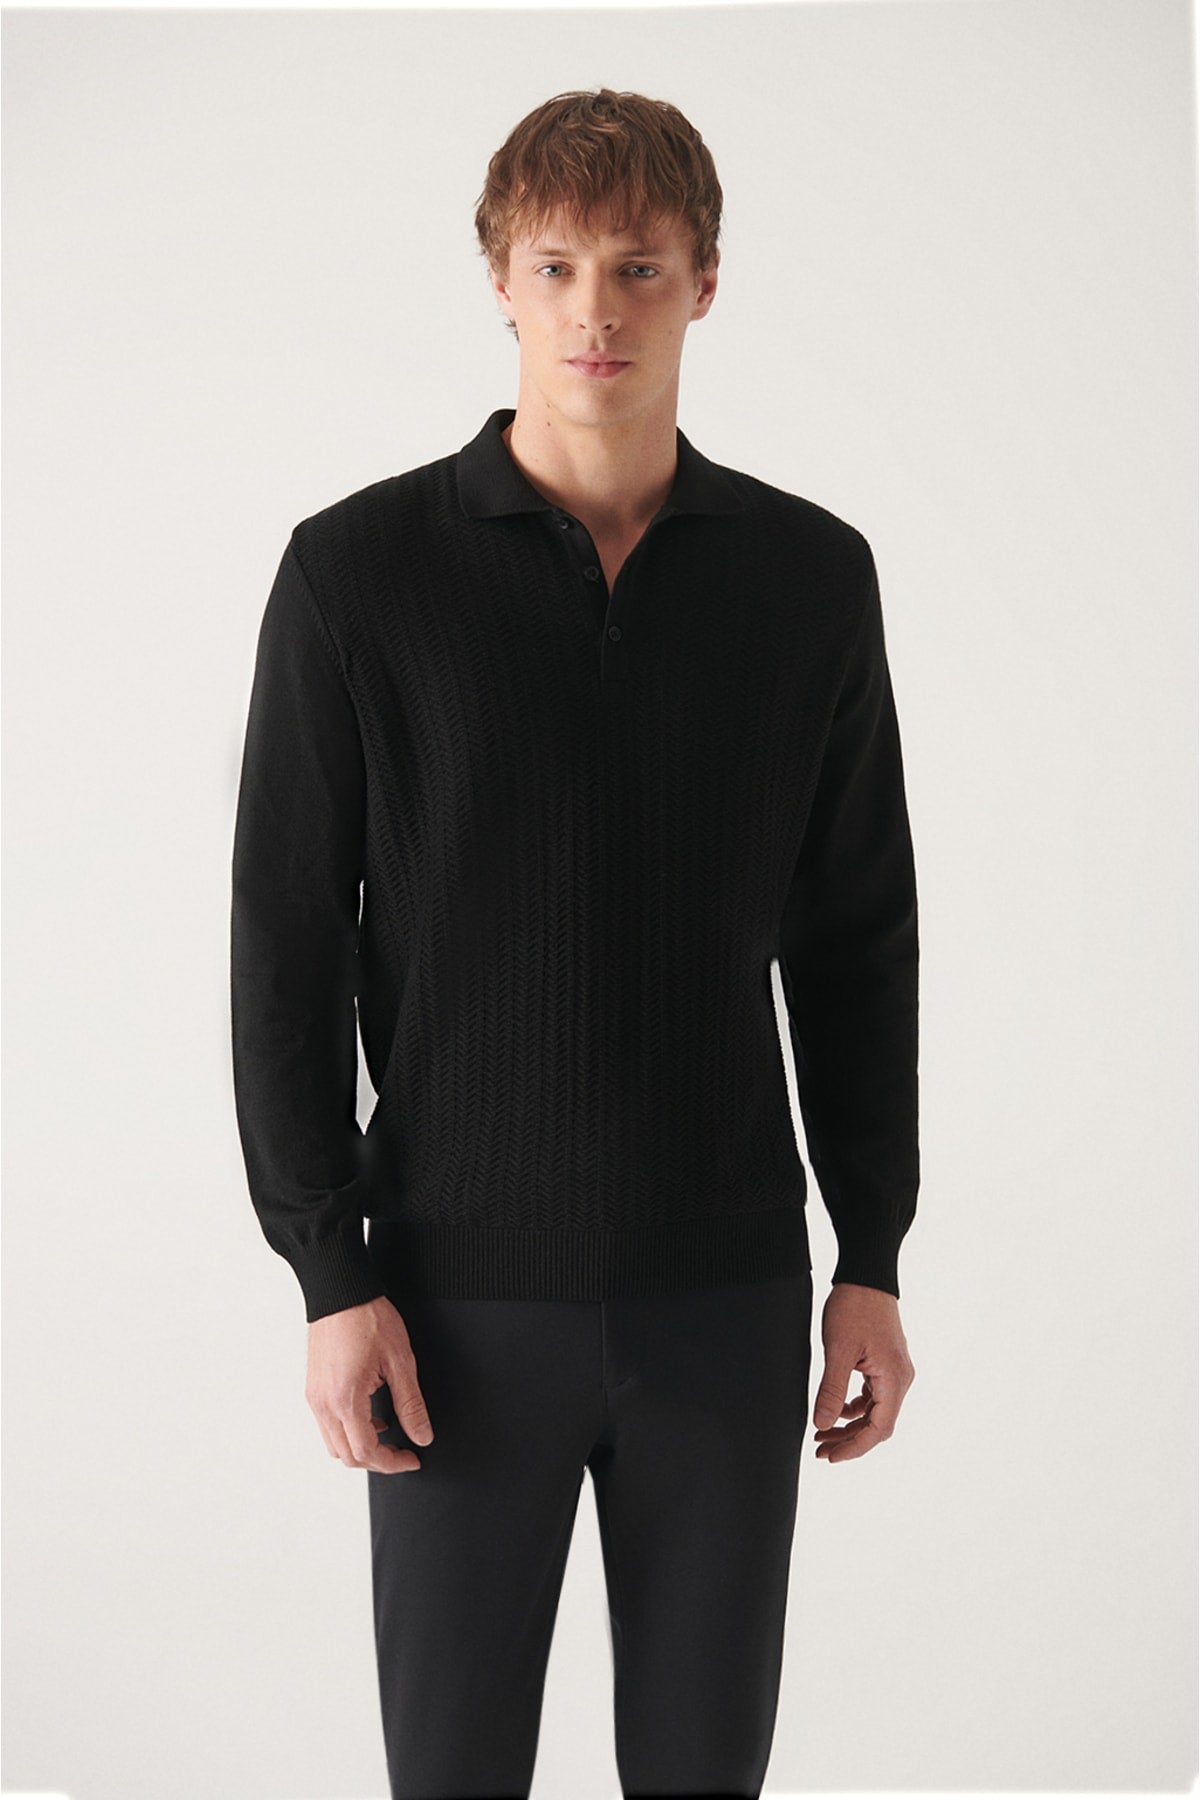 Men's Black Polo Yaka Fishing Patterned Cotton Knitwear Sweater A22y5055